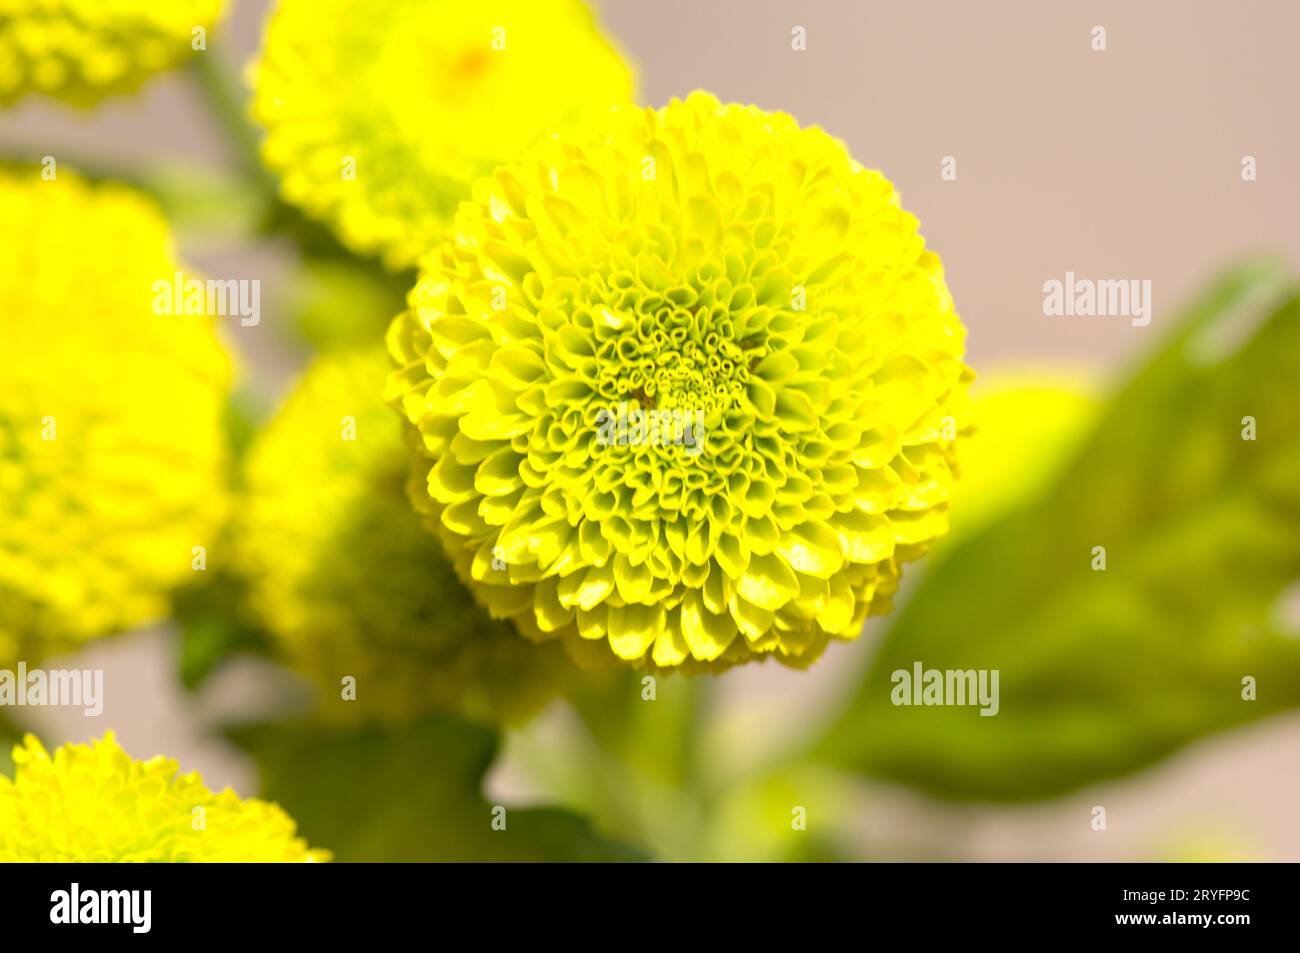 Selektive Fokusaufnahme der gelben Chrysantheme Stockfoto